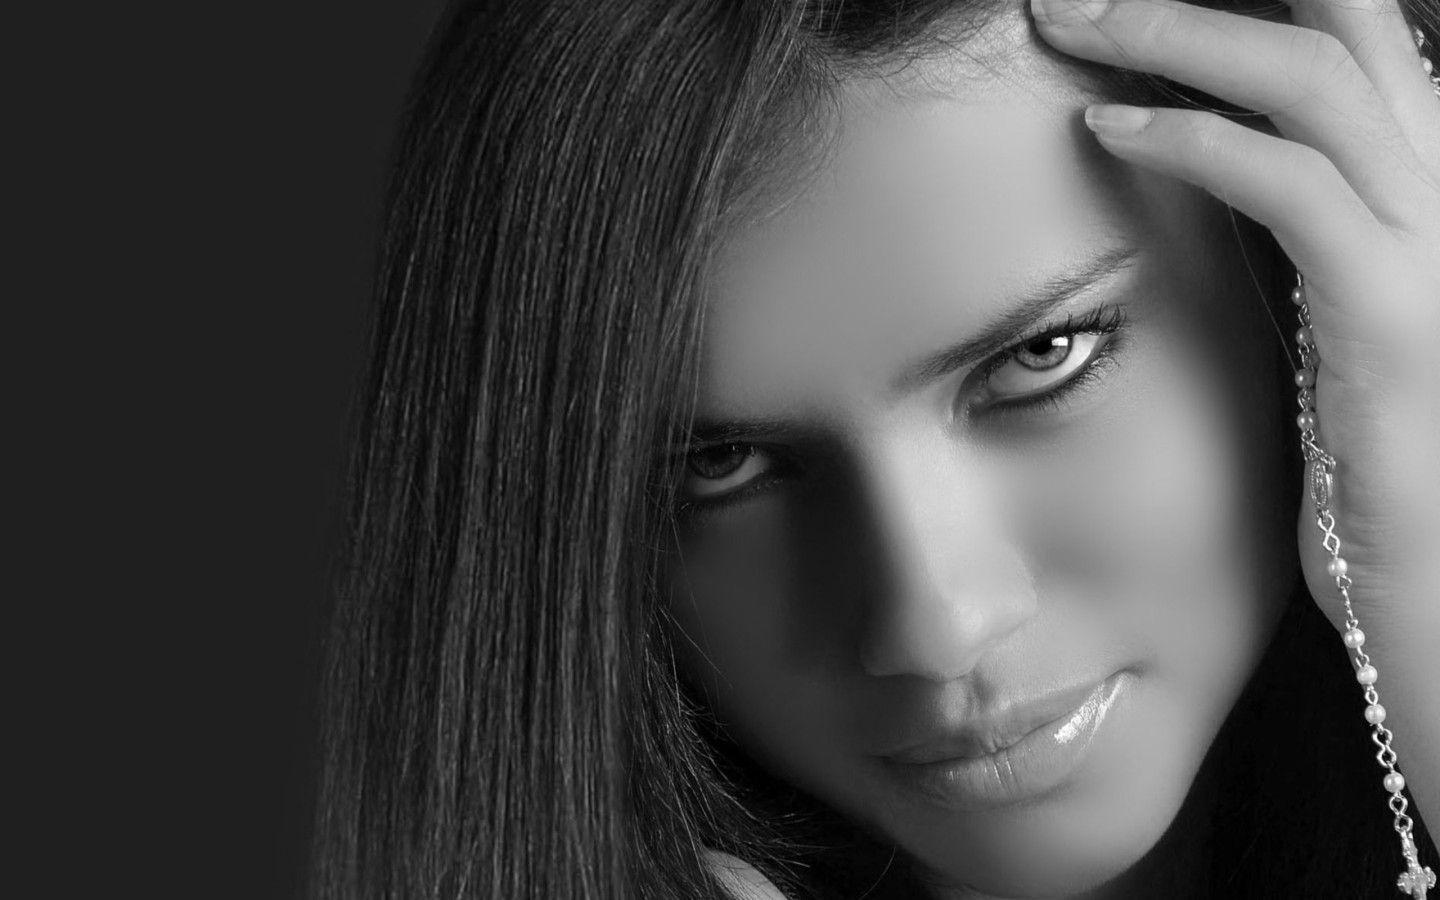 Adriana Lima Beautiful Face widescreen wallpaper. Wide